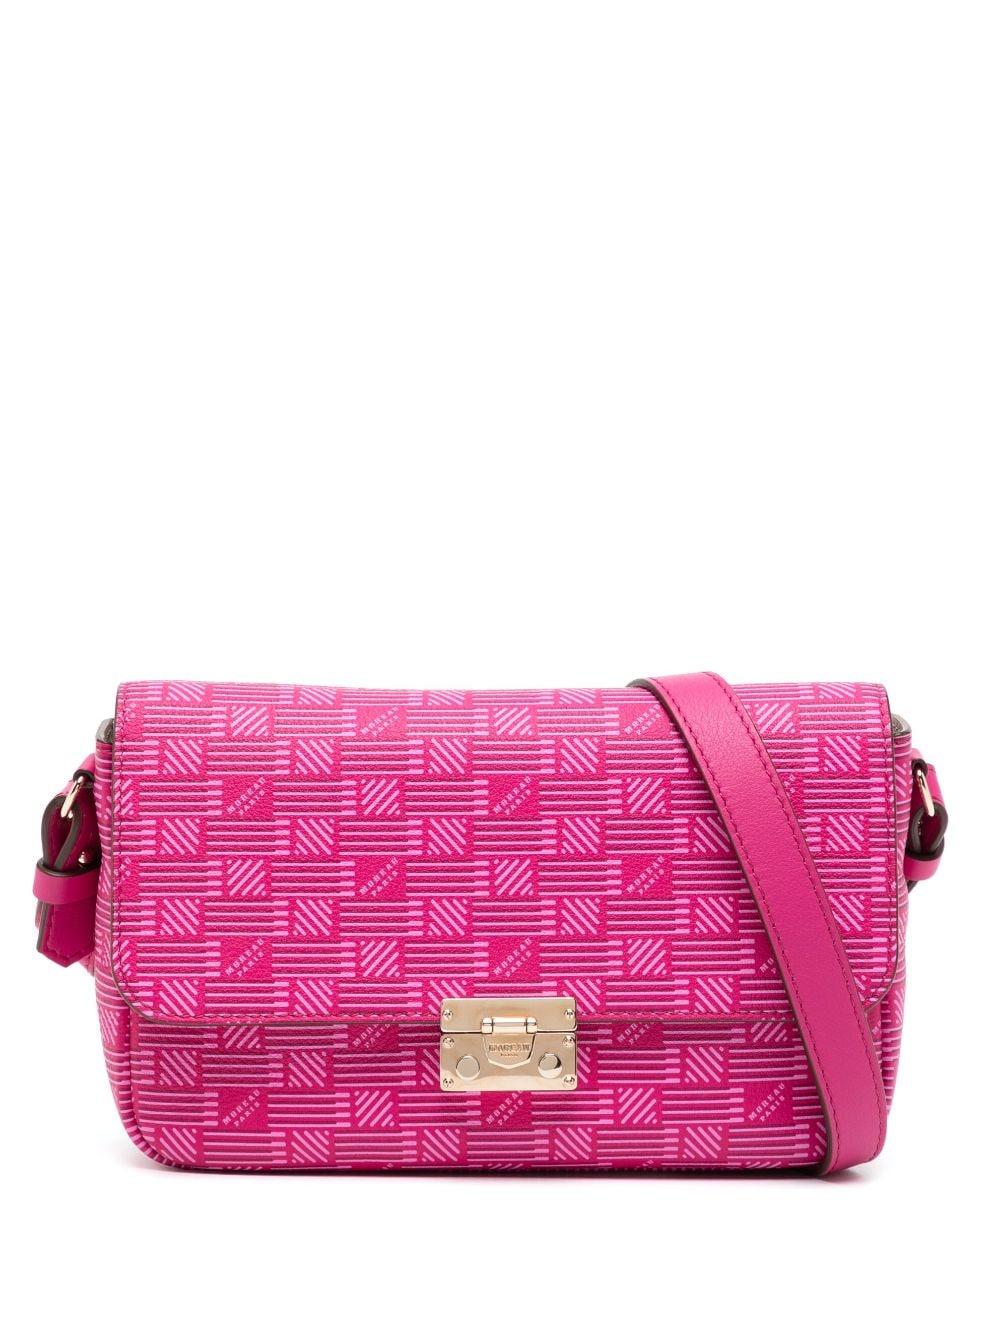 Moreau Croisette Crossbody Bag in Pink